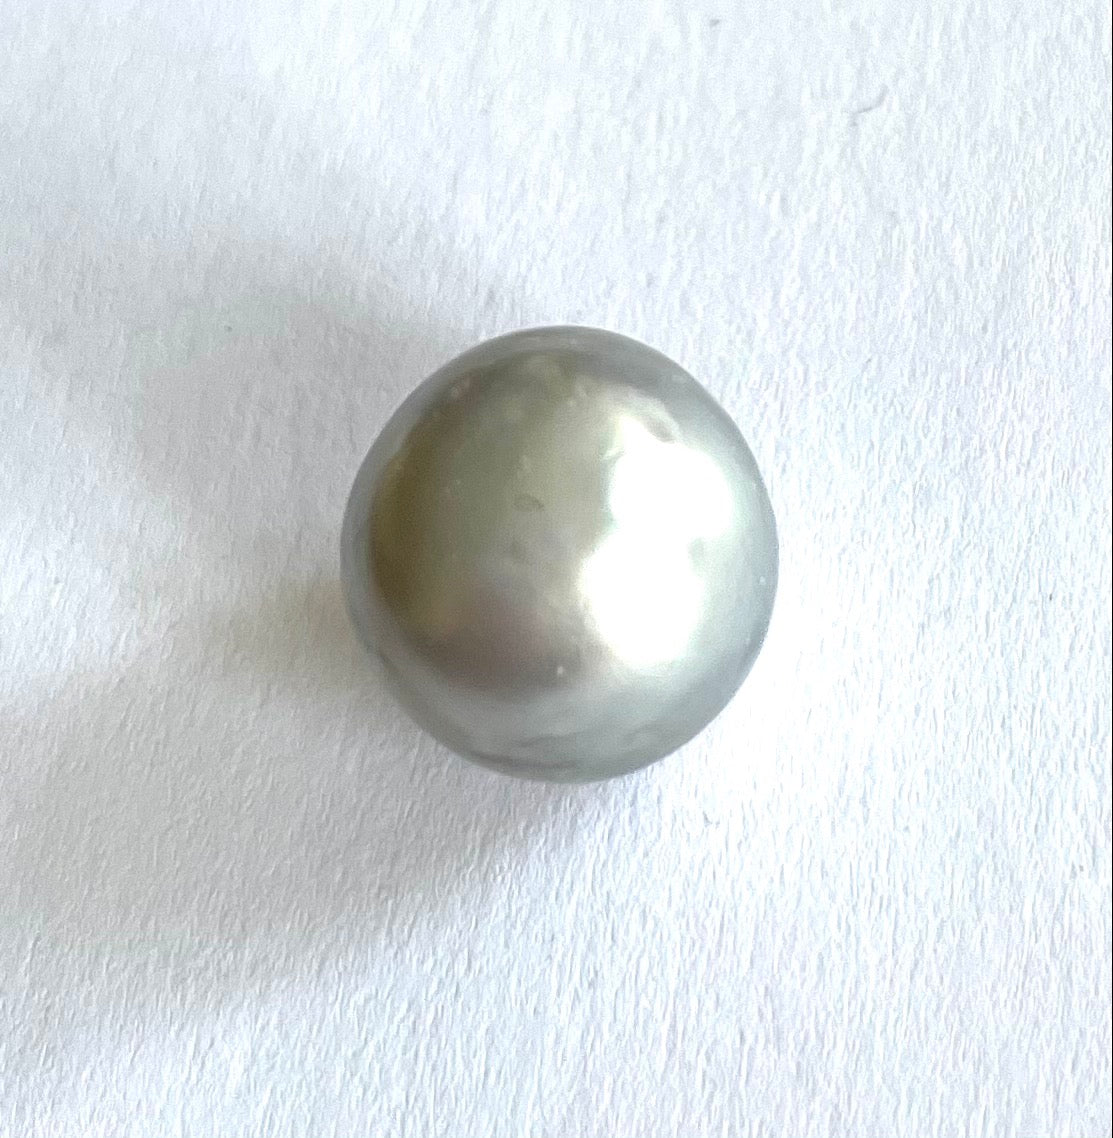 single pearl to symbolize nacre